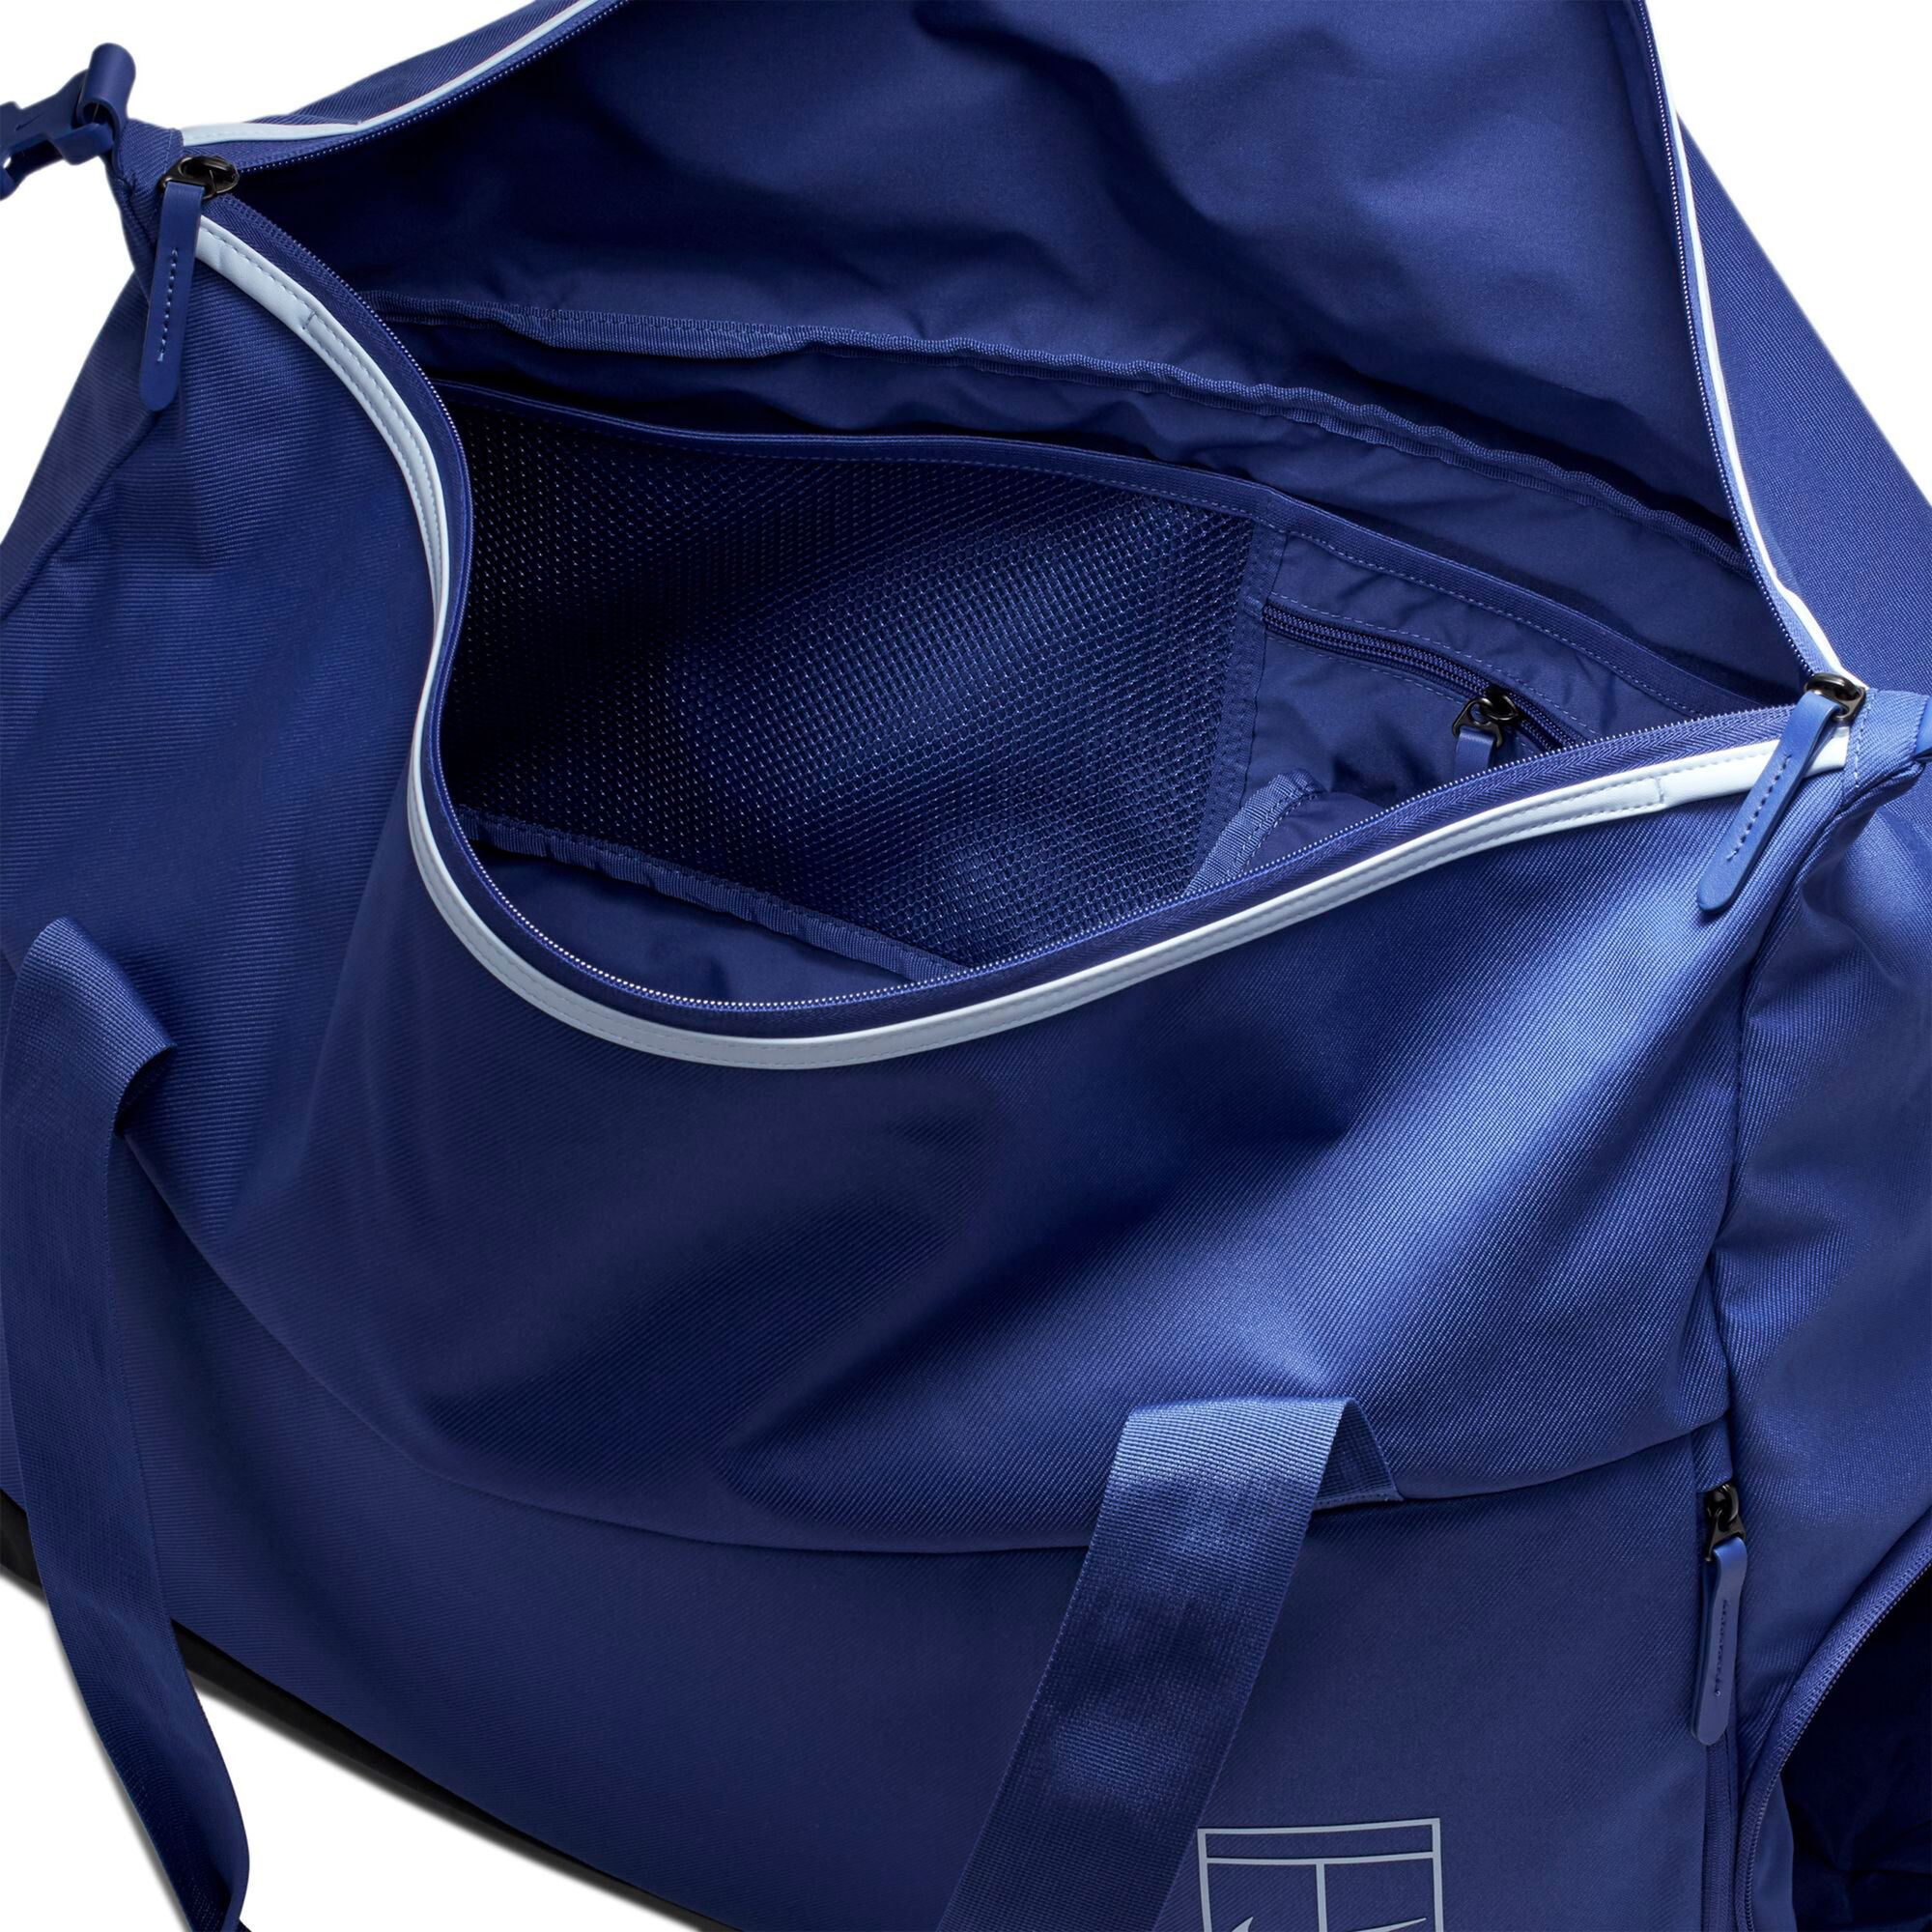 Kindercentrum Landelijk geef de bloem water buy Nike Advantage Sports Bag - Blue, Black online | Tennis-Point